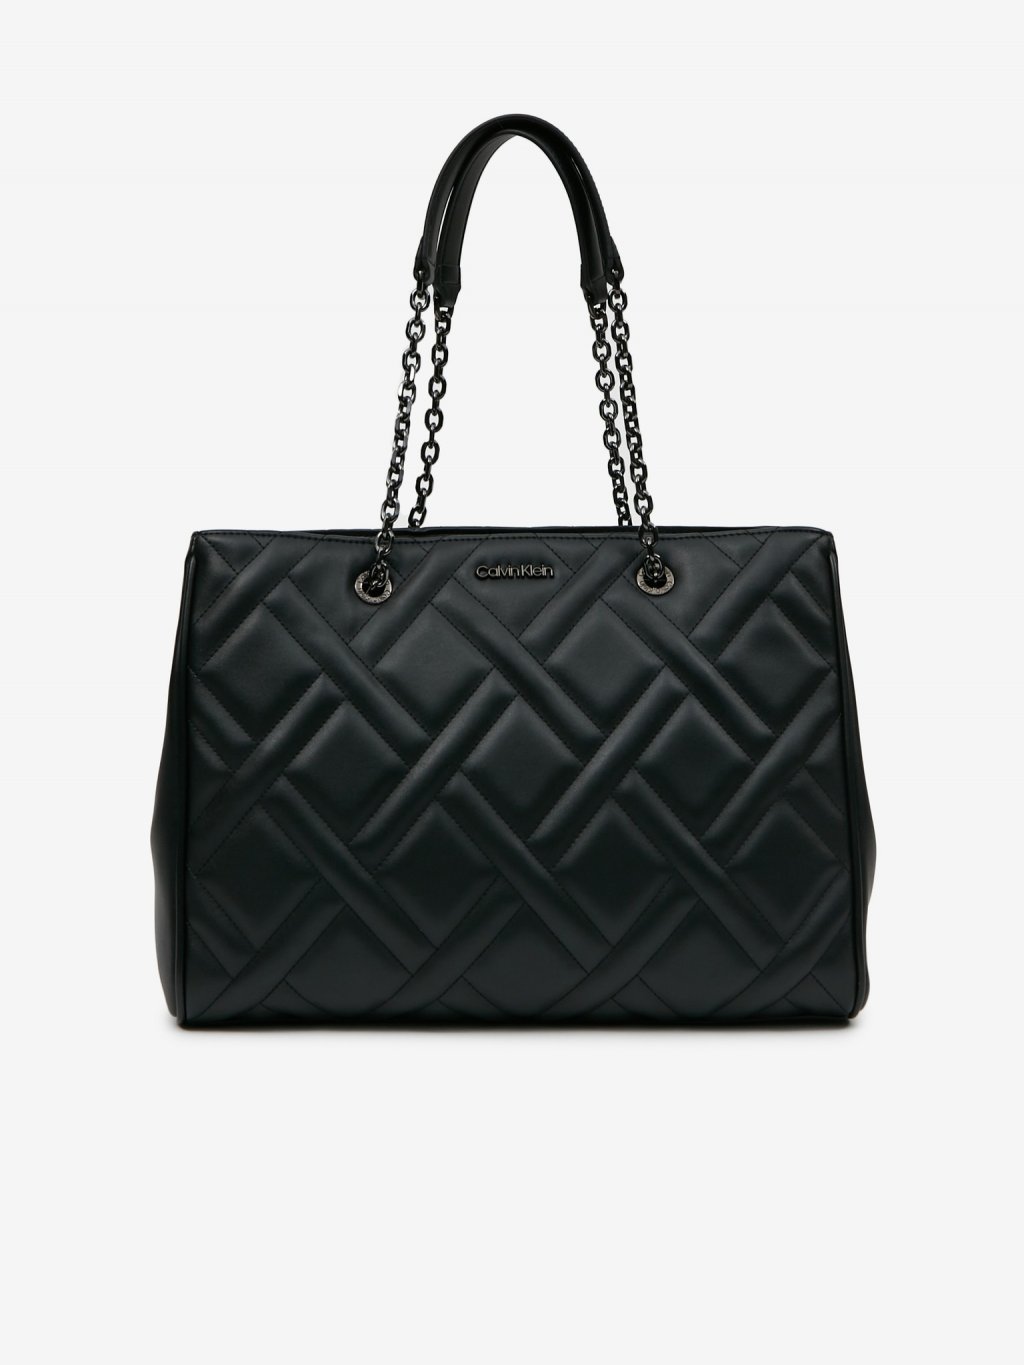 Calvin Klein dámská kabelka černá s logem - FASHION AVENUE